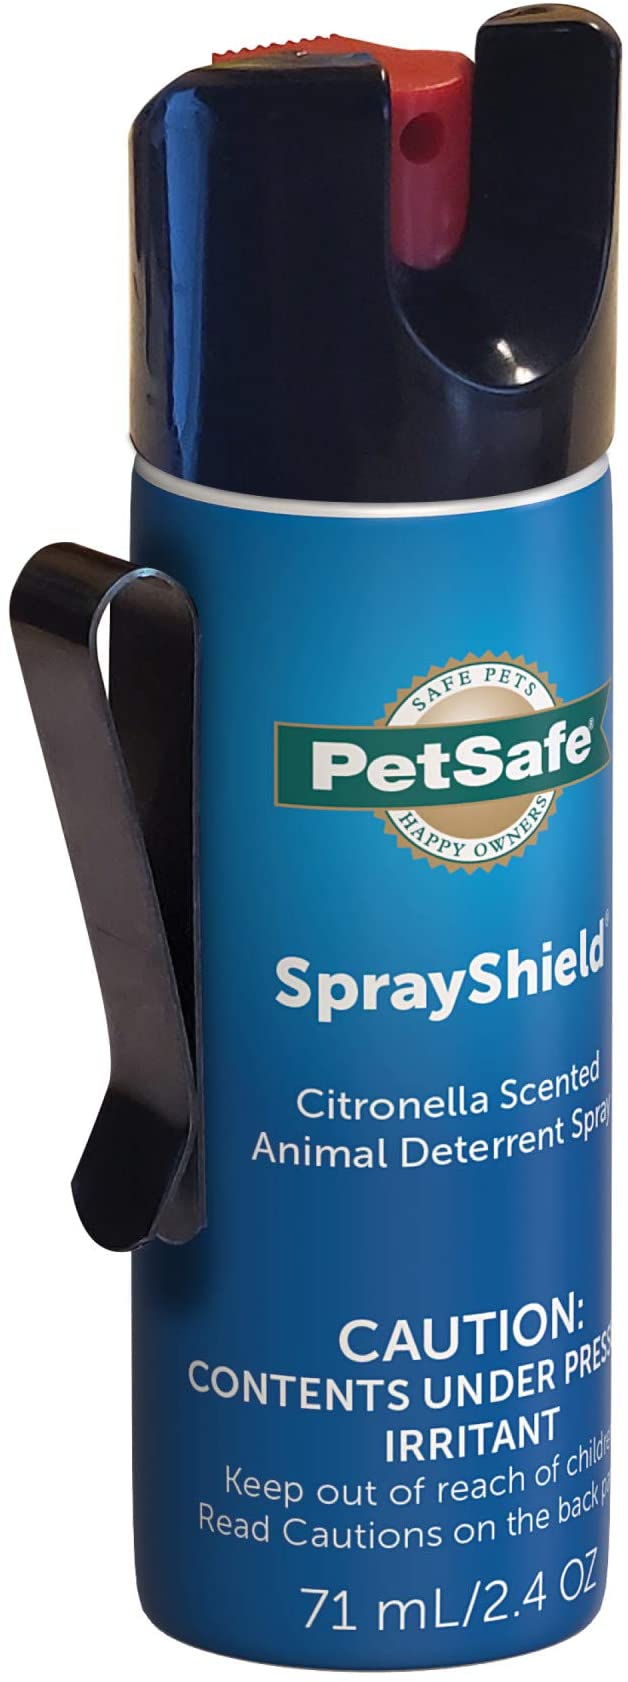 PetSafe SprayShield Animal Deterrent with Clip - Citronella Dog Repellent Spray " Ranges up to 10 ft